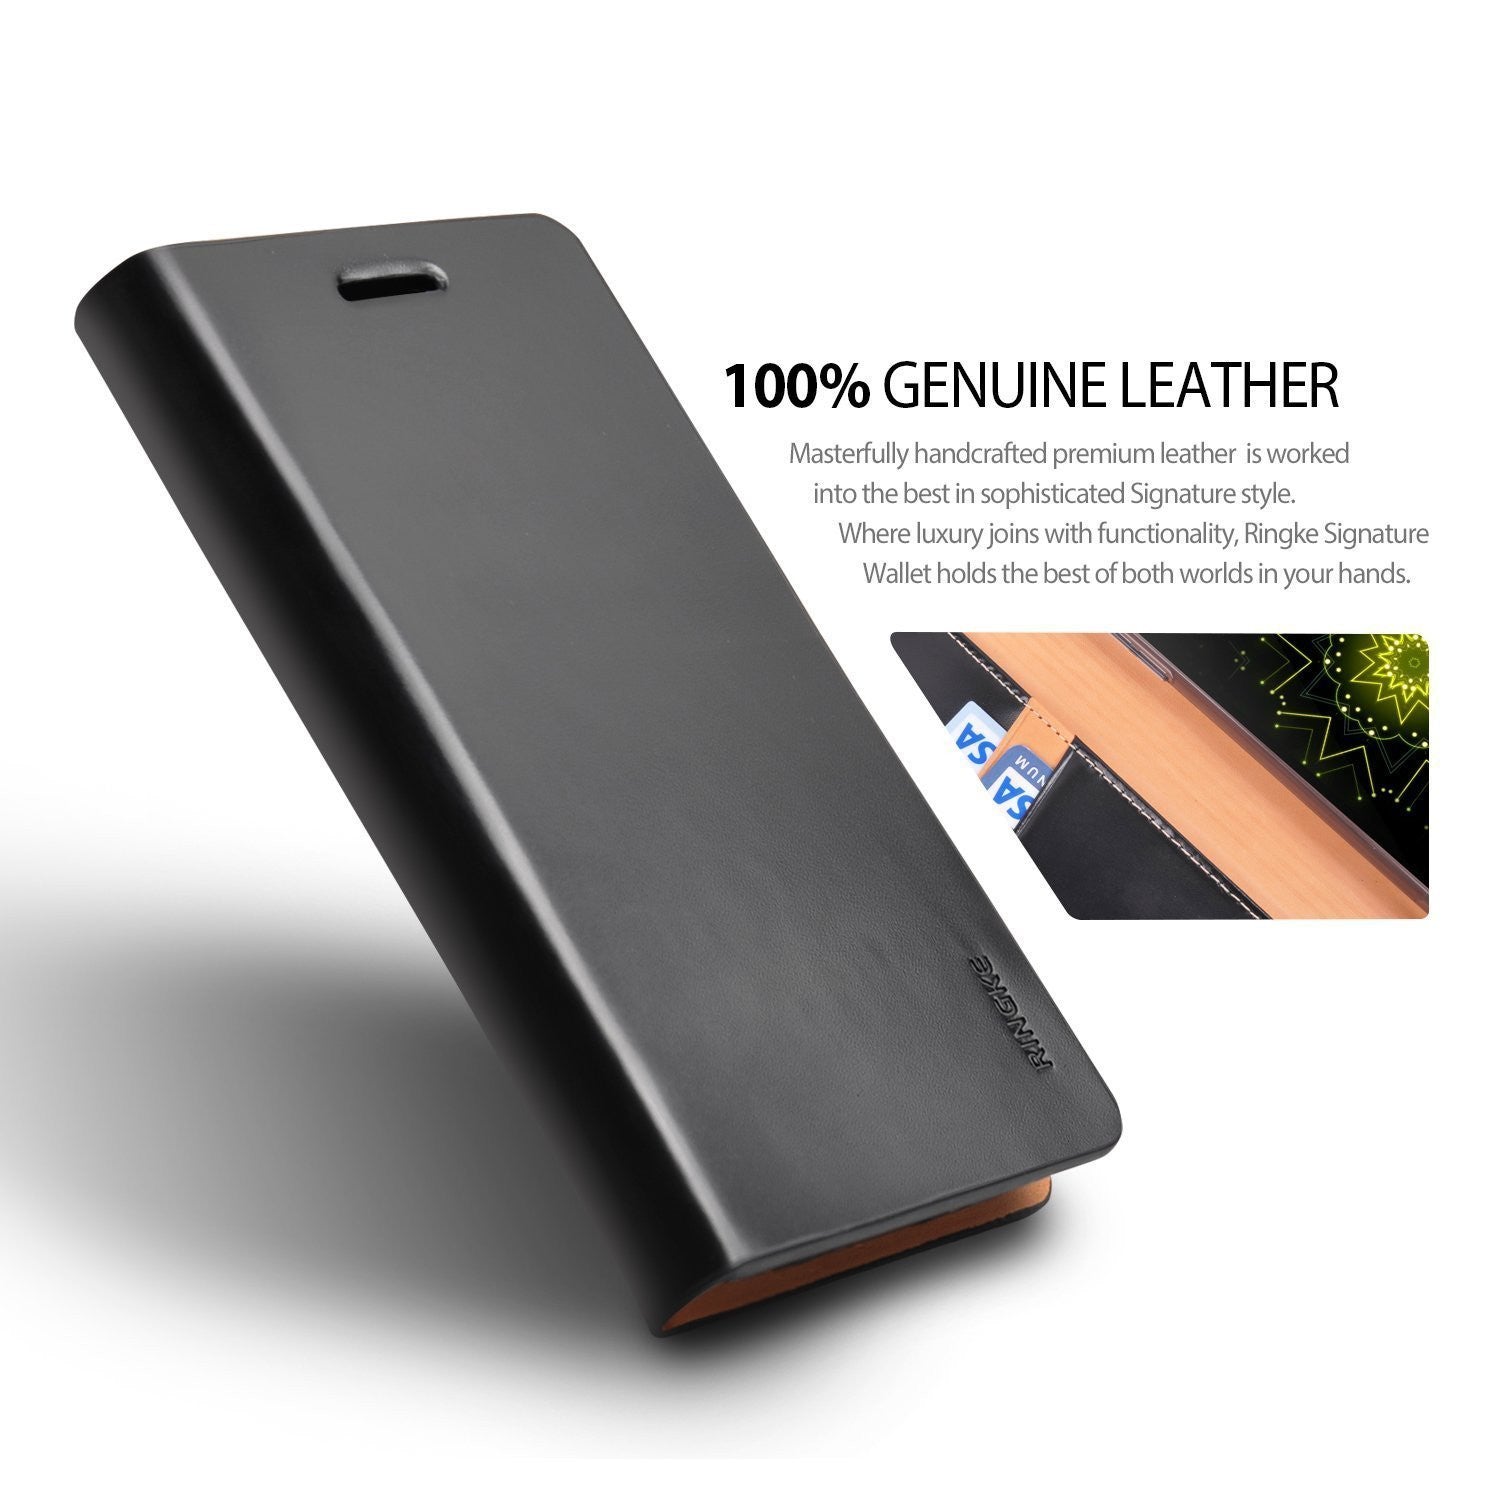 100% genuine leather